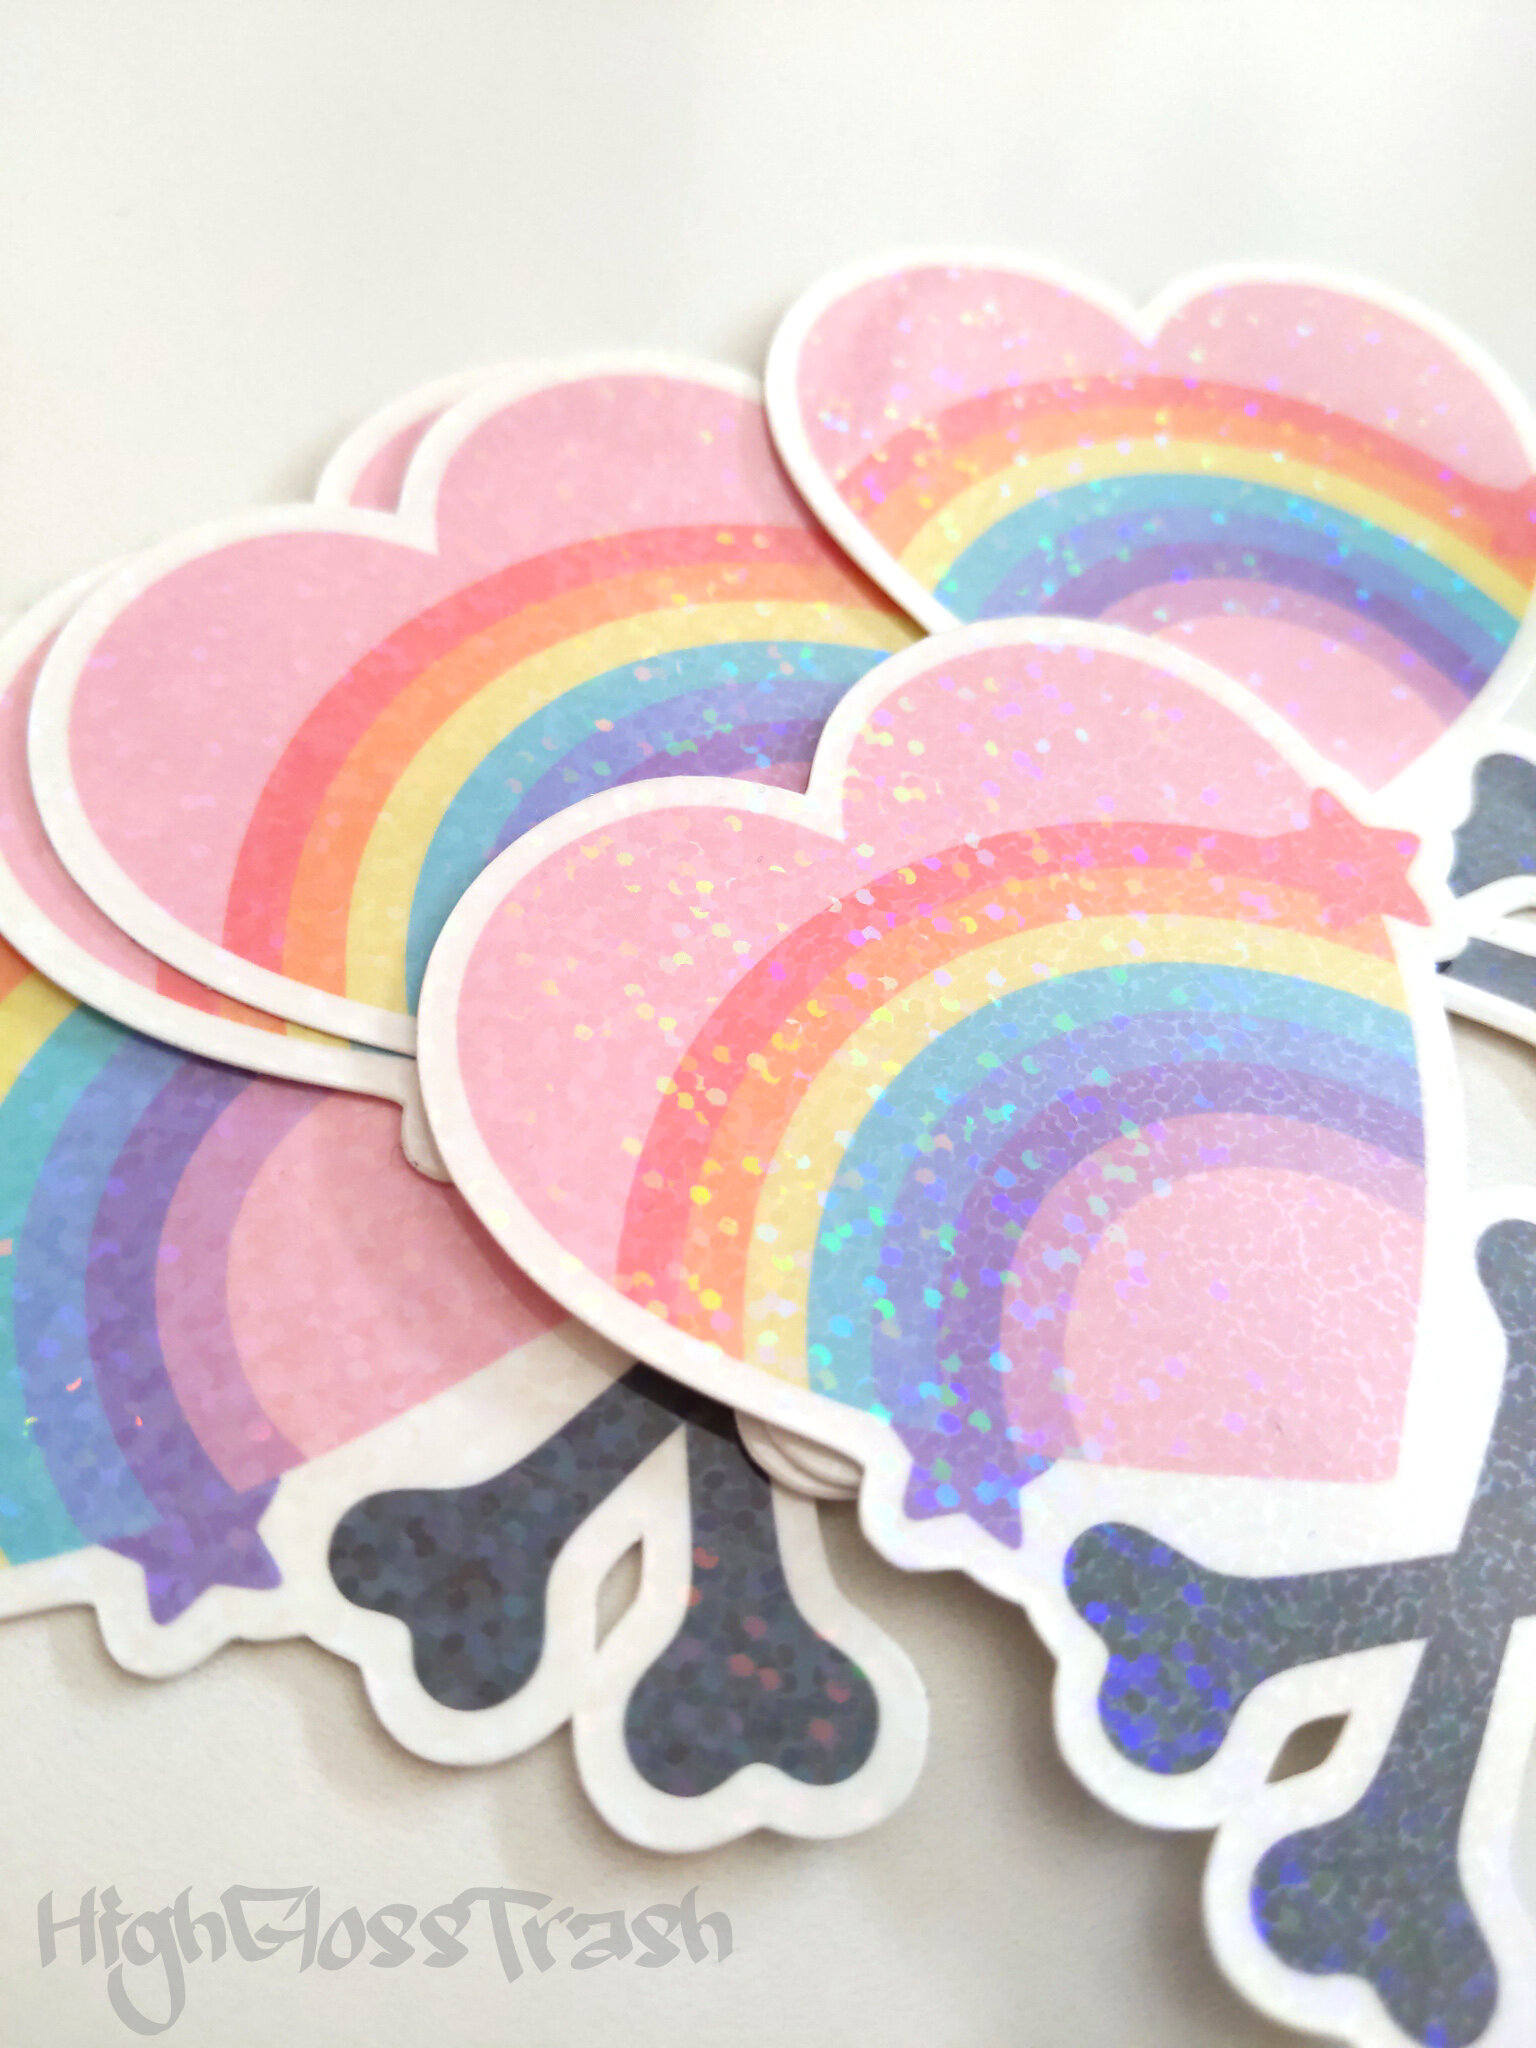 Rainbow Splash Sparkly Hearts Gem Sticker Assortment rsg3 – Simon Says Stamp